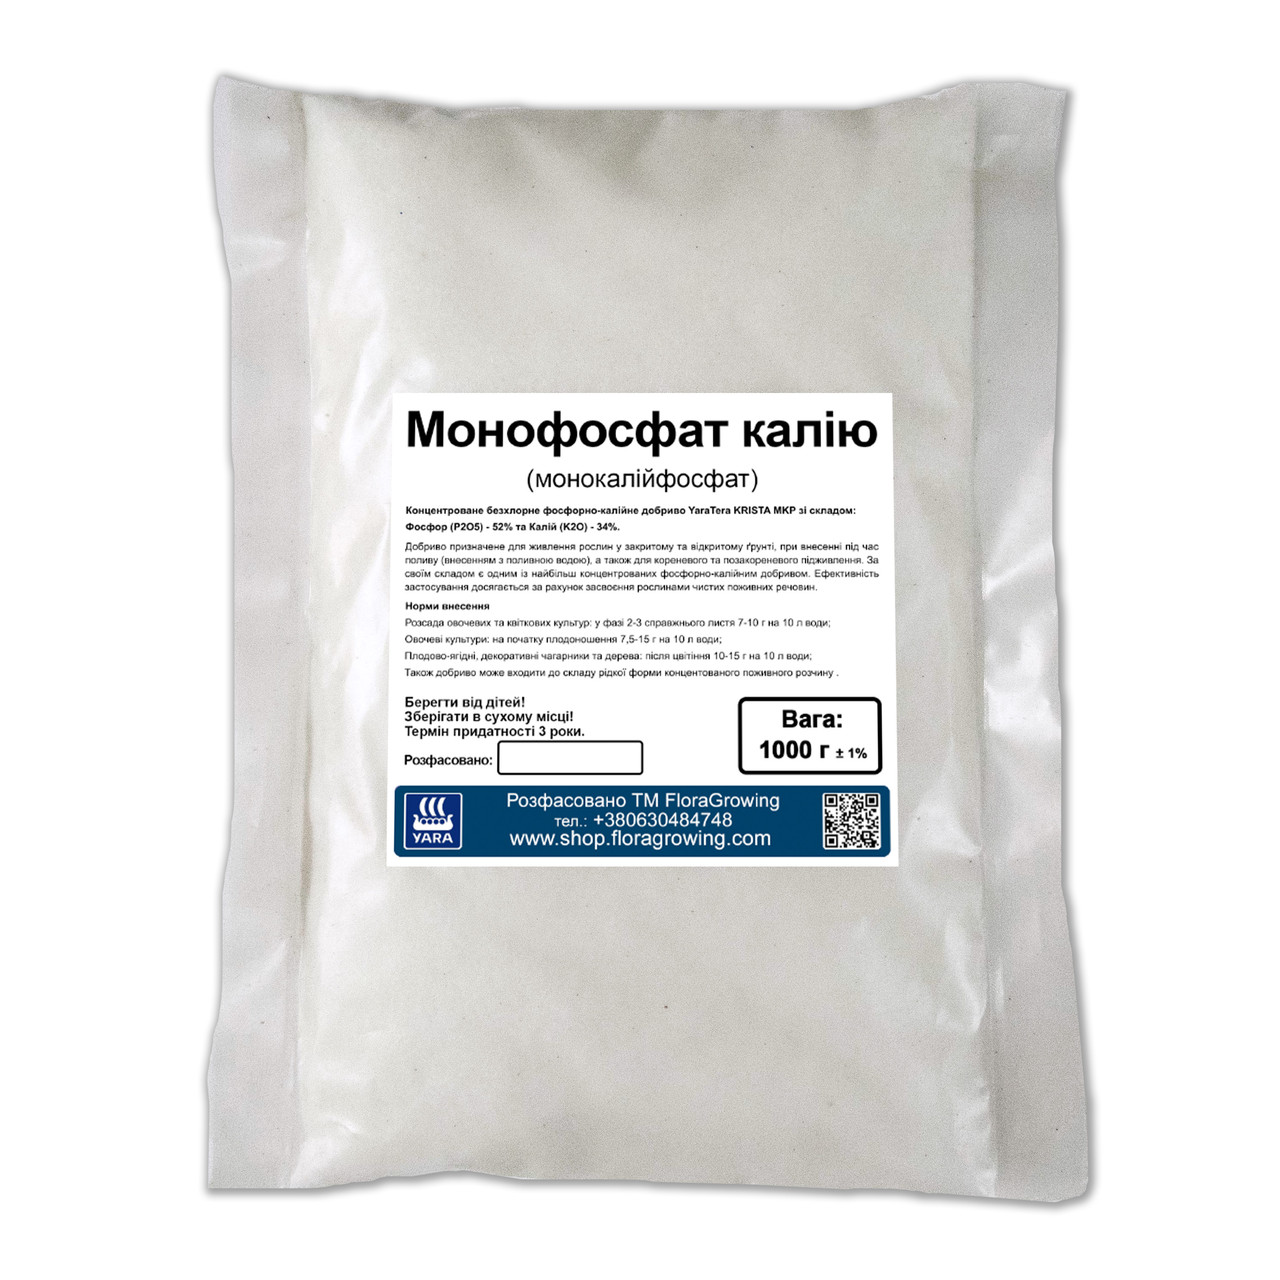 1 кг Монофосфат калію - ЯраТера Кріста МКР